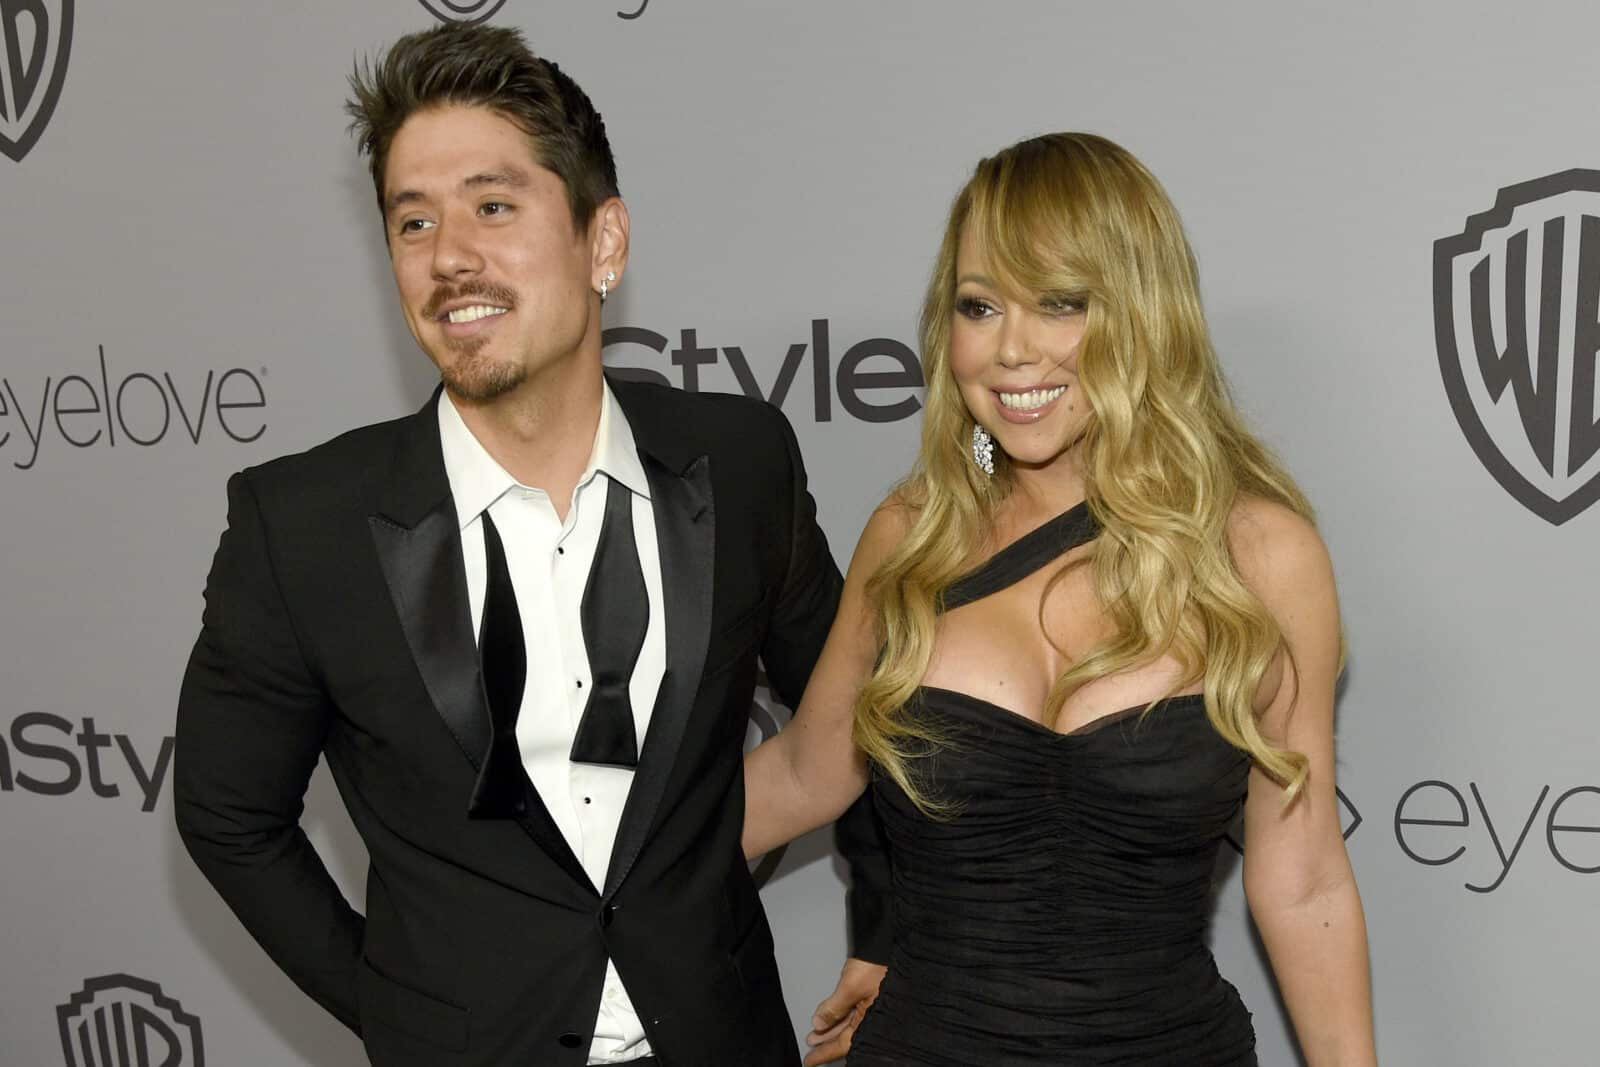 Mariah Carey and Bryan Tanaka split after 7 years together, dancer